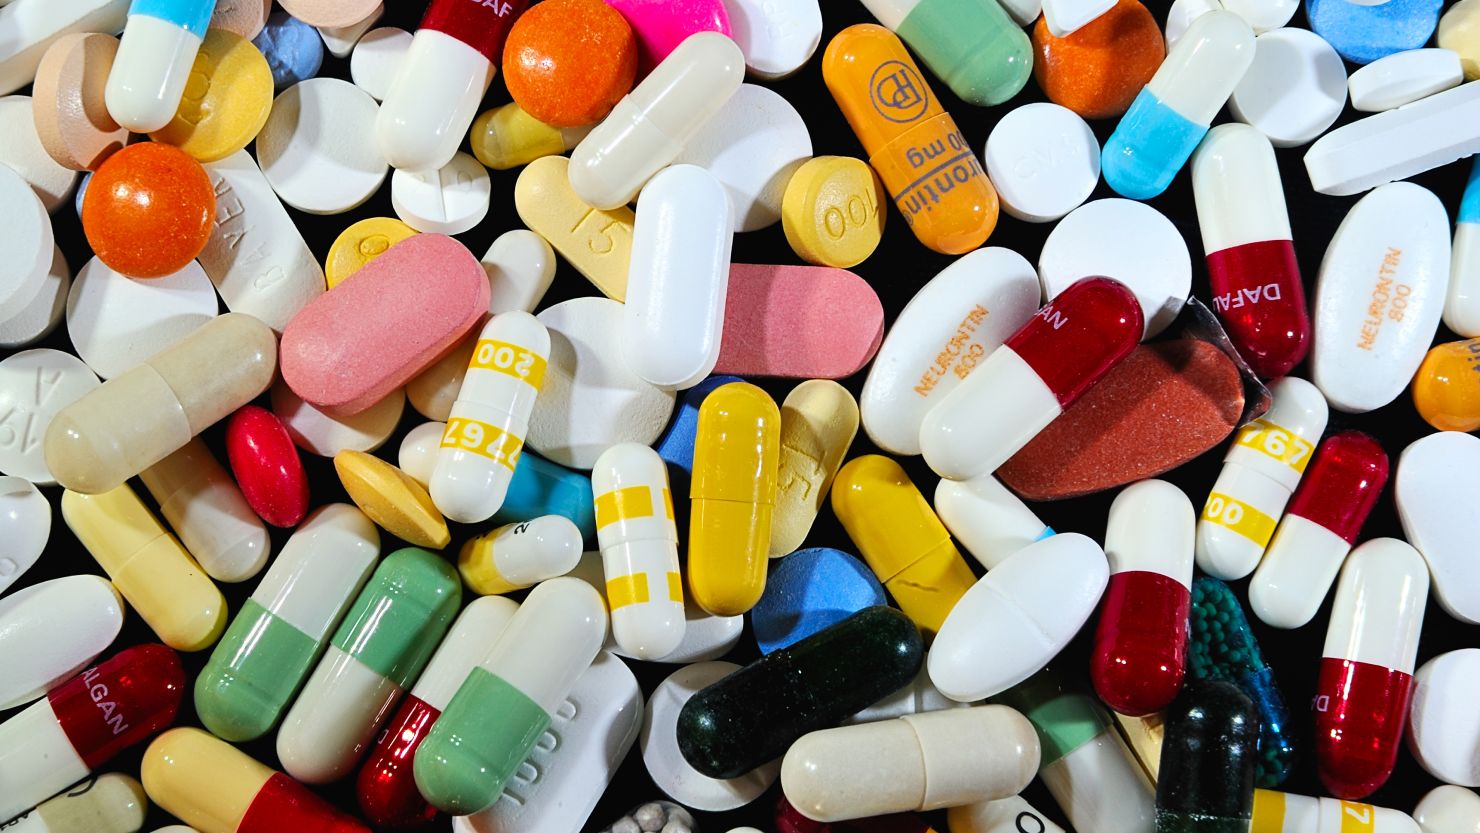 https://media.cnn.com/api/v1/images/stellar/prod/150827130939-medicine-pills-capsules.jpg?q=x_4,y_220,h_1937,w_3442,c_crop/h_833,w_1480